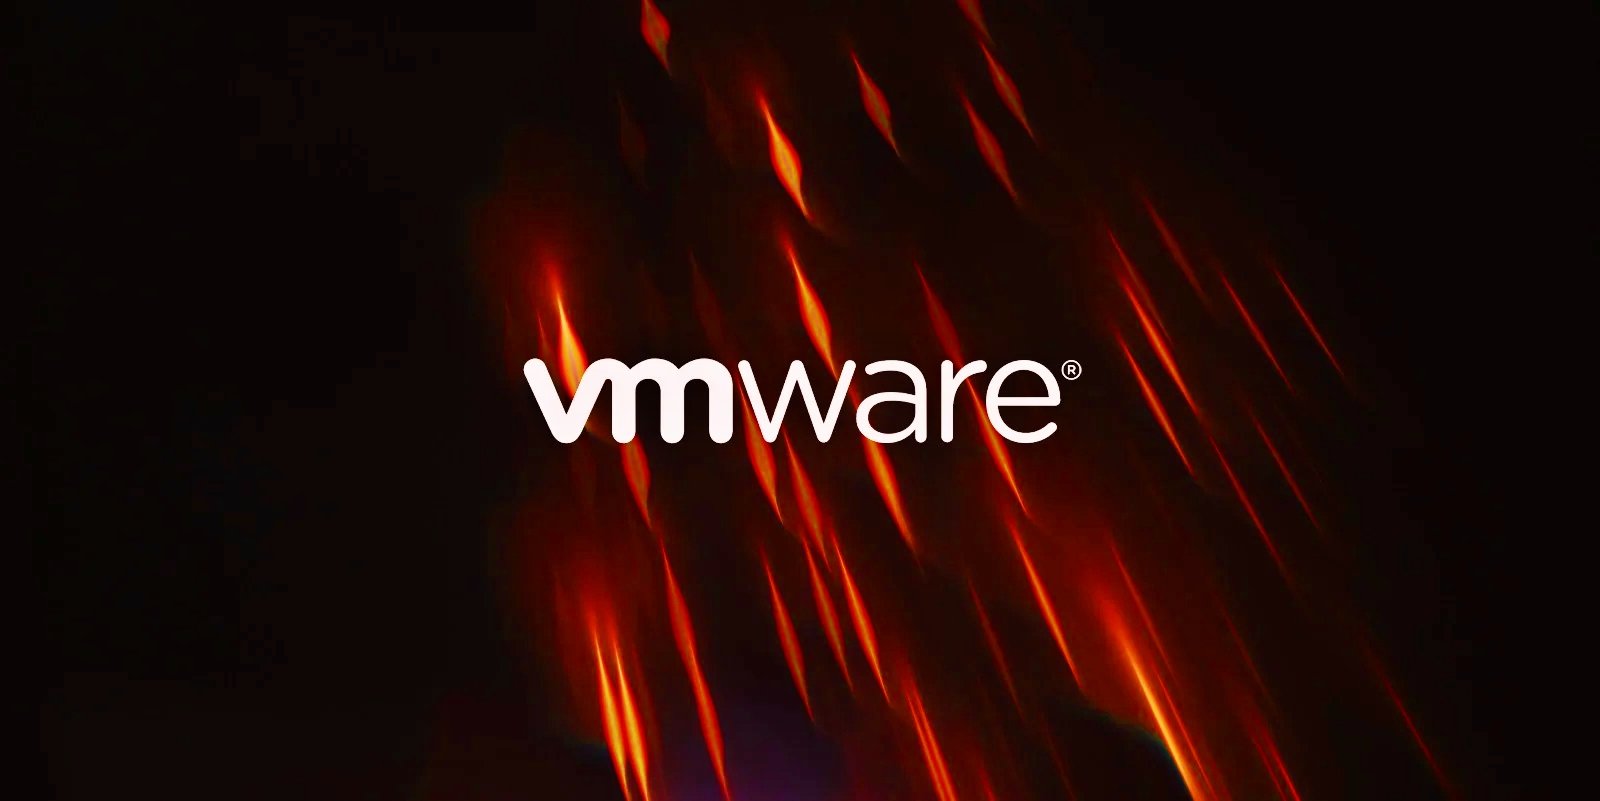 VMware logo in flames